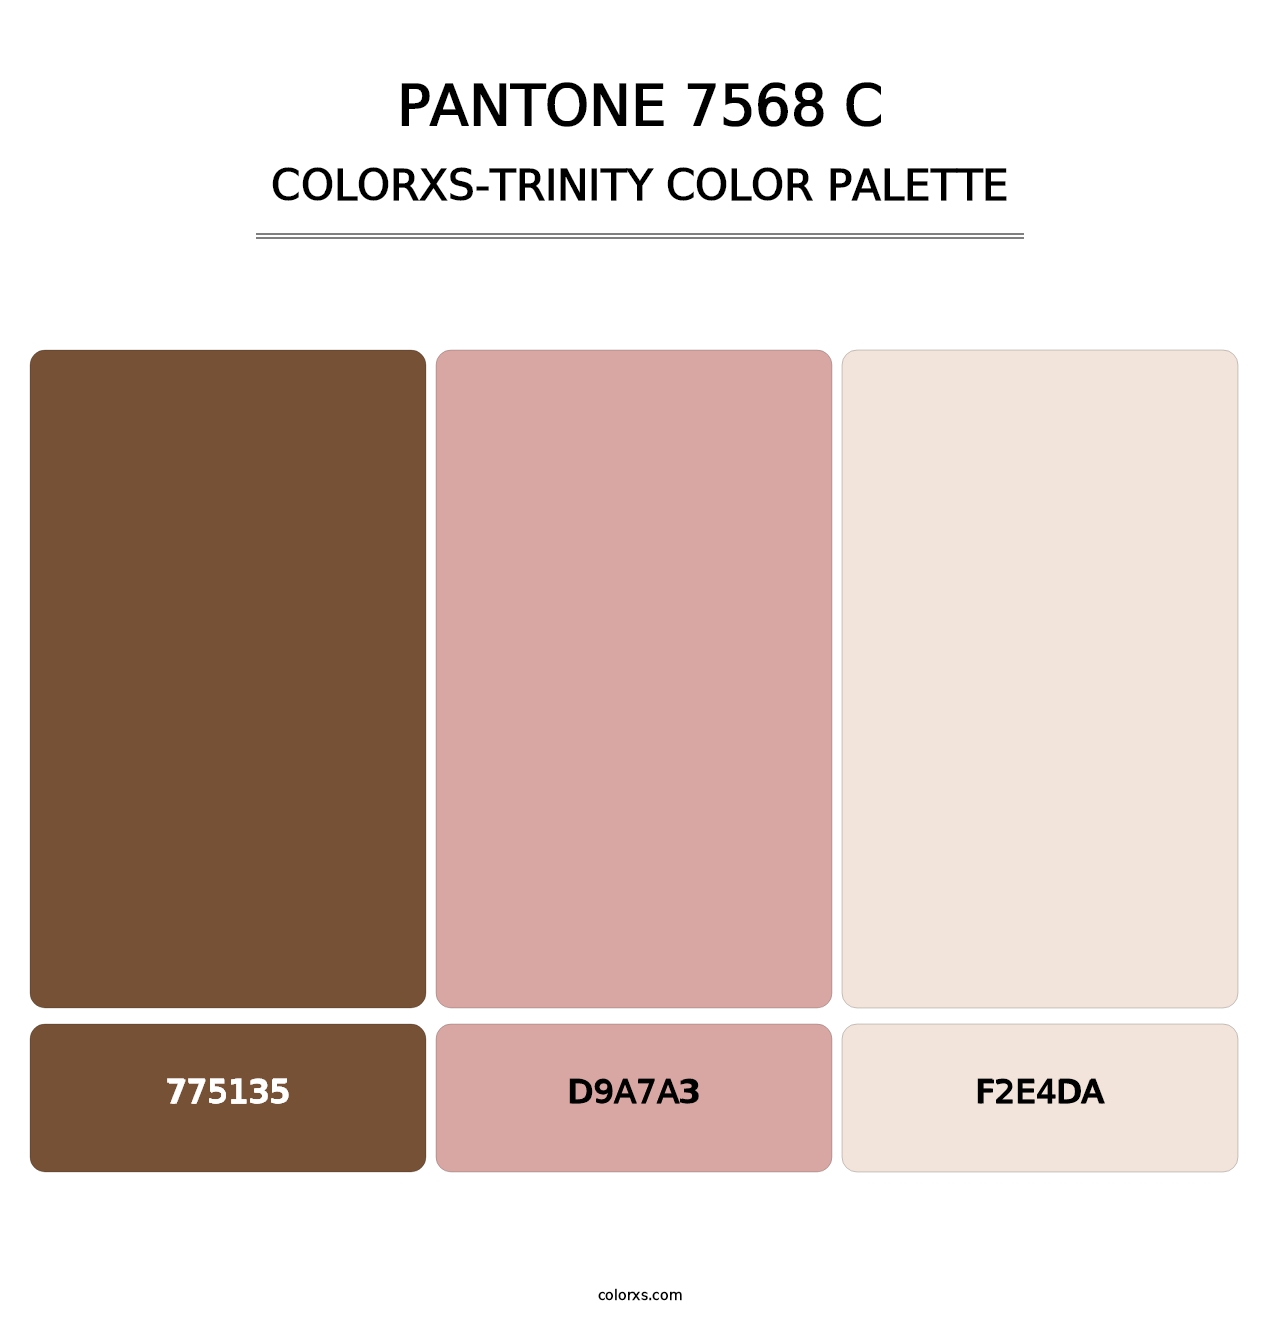 PANTONE 7568 C - Colorxs Trinity Palette